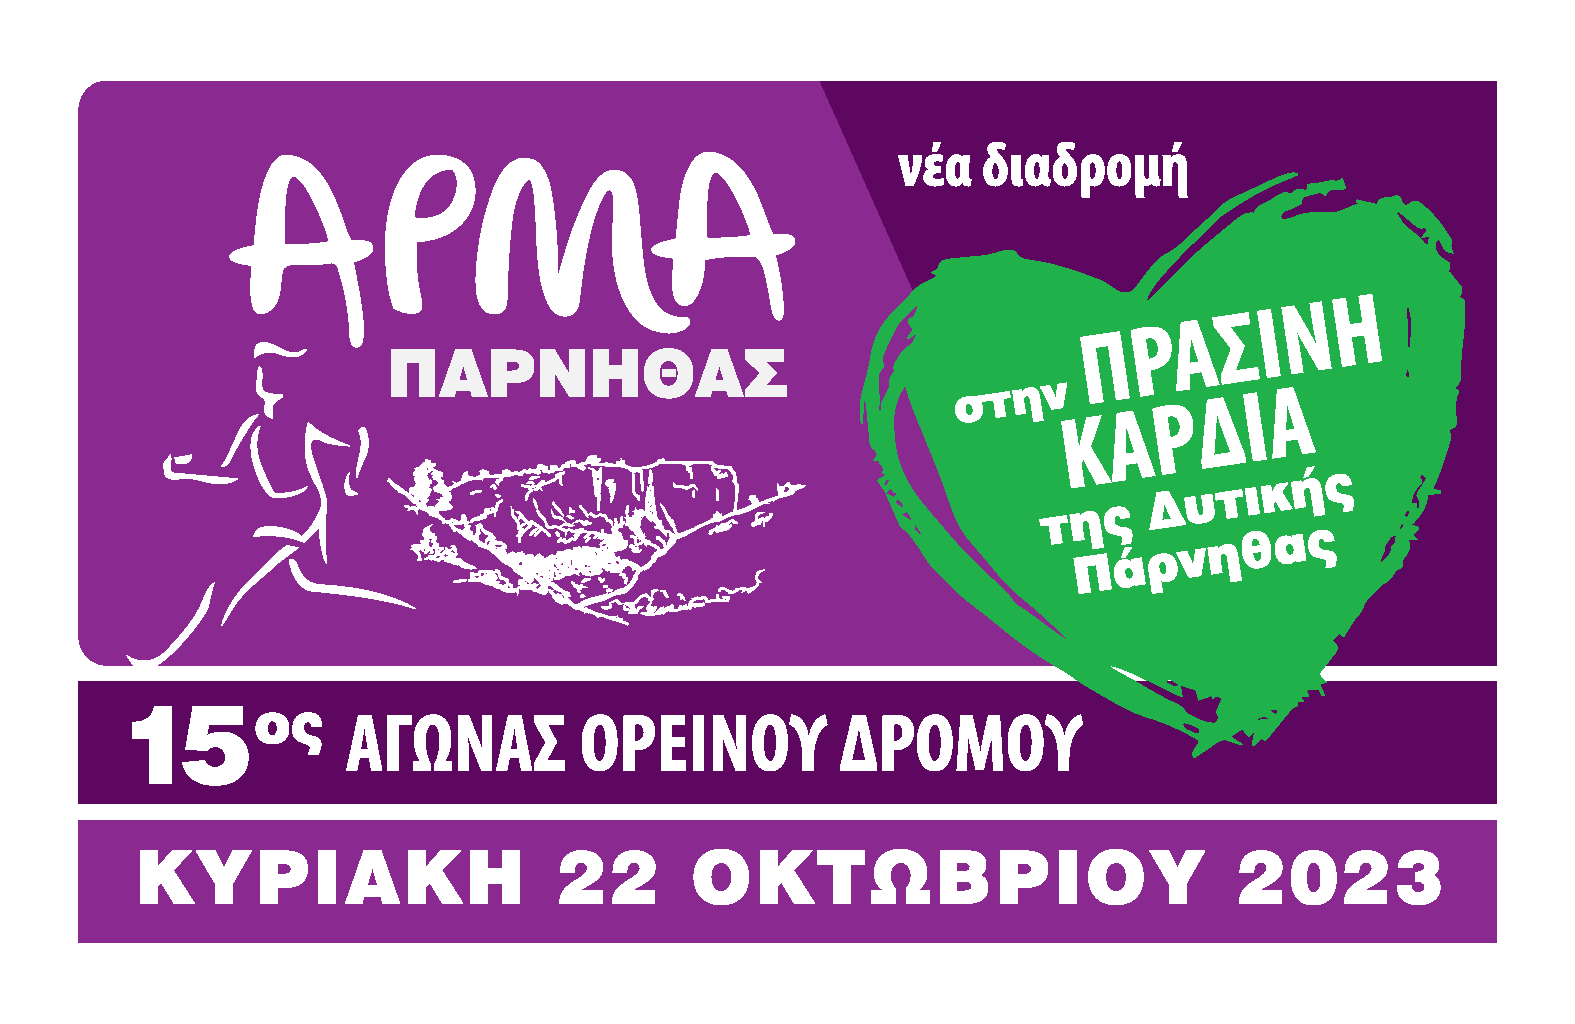 ArmaParnithas.gr